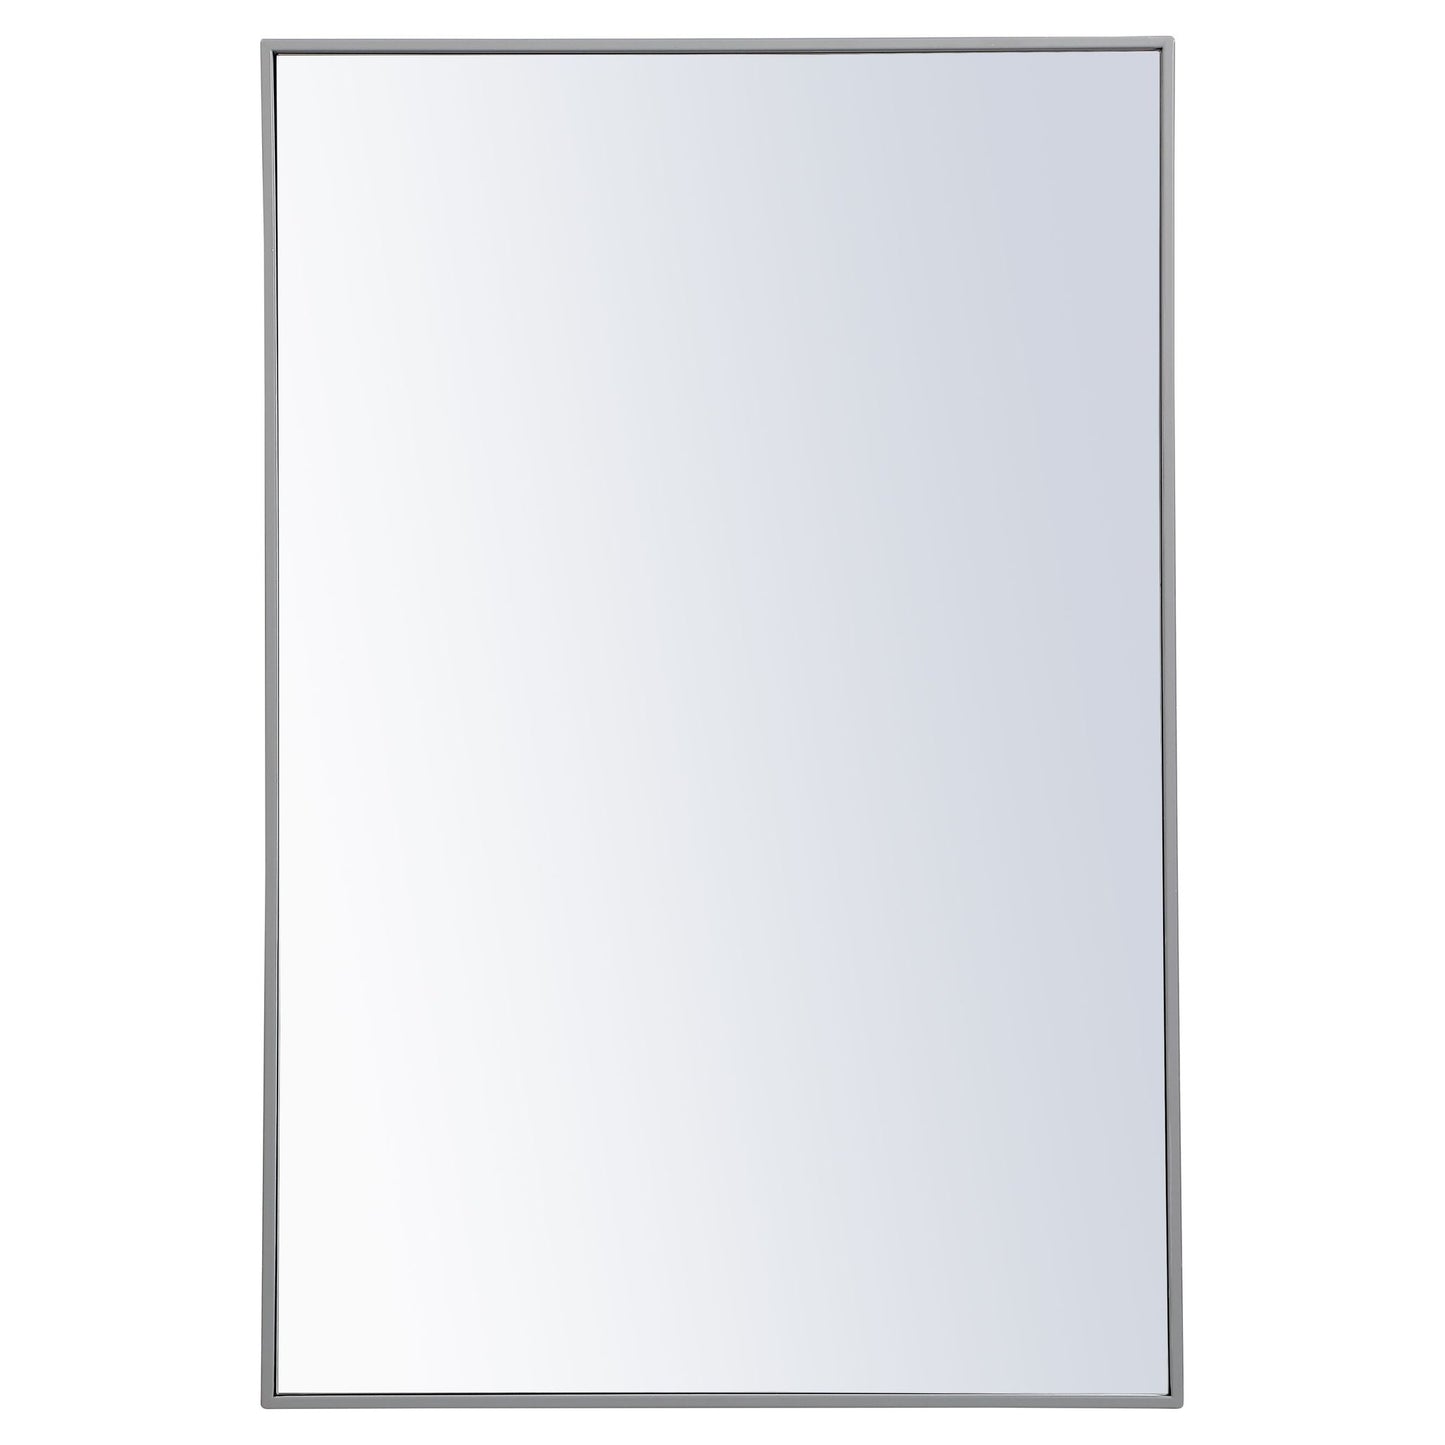 MR4077GR Monet 28" x 42" Metal Framed Rectangular Mirror in Grey